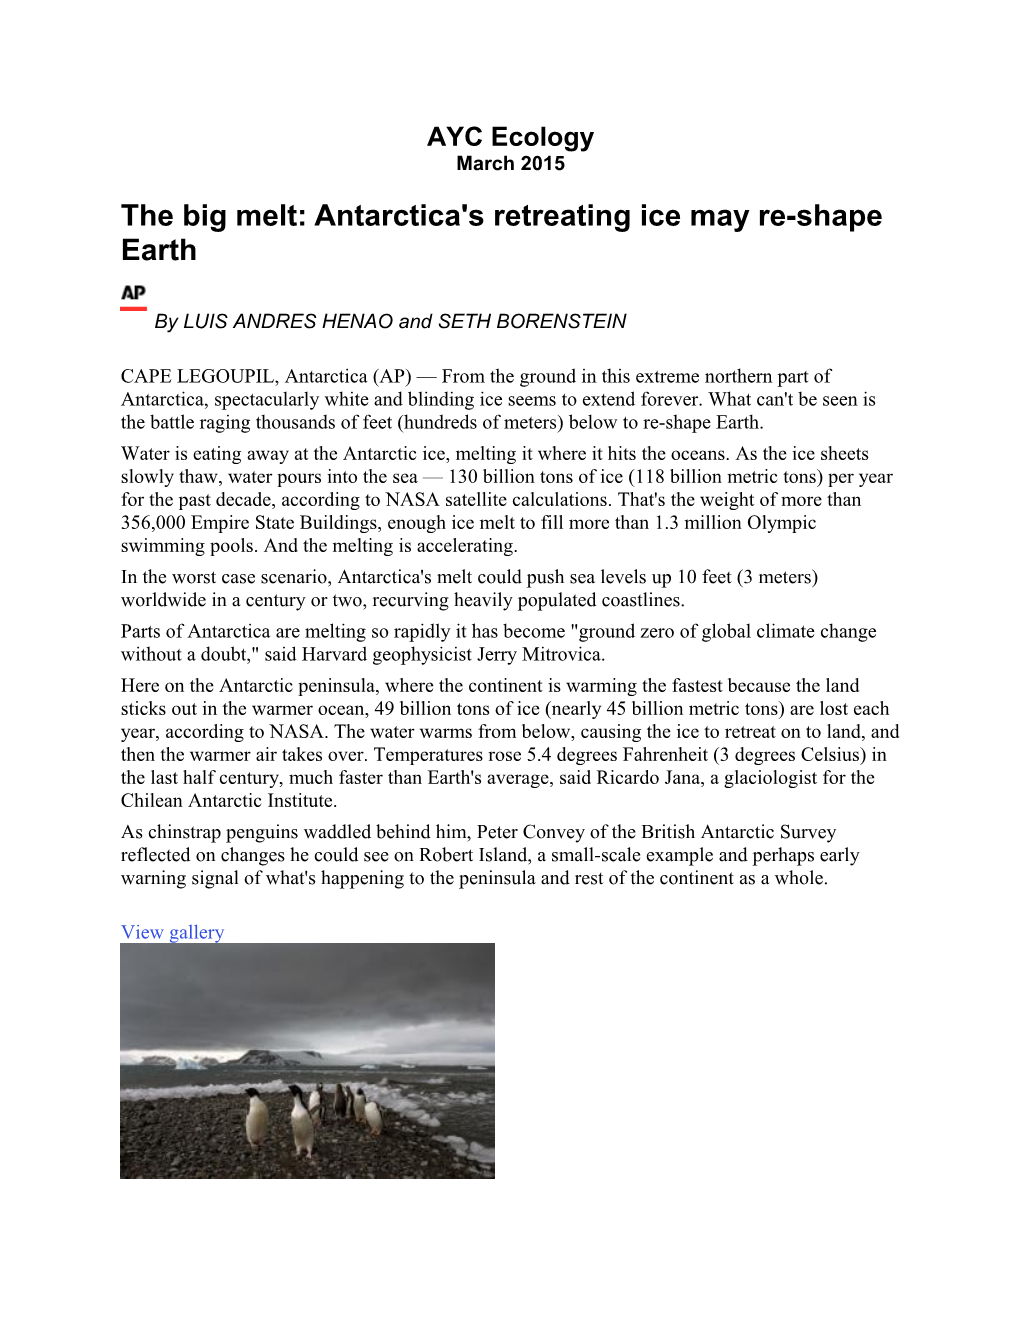 The Big Melt: Antarctica's Retreating Ice May Re-Shape Earth